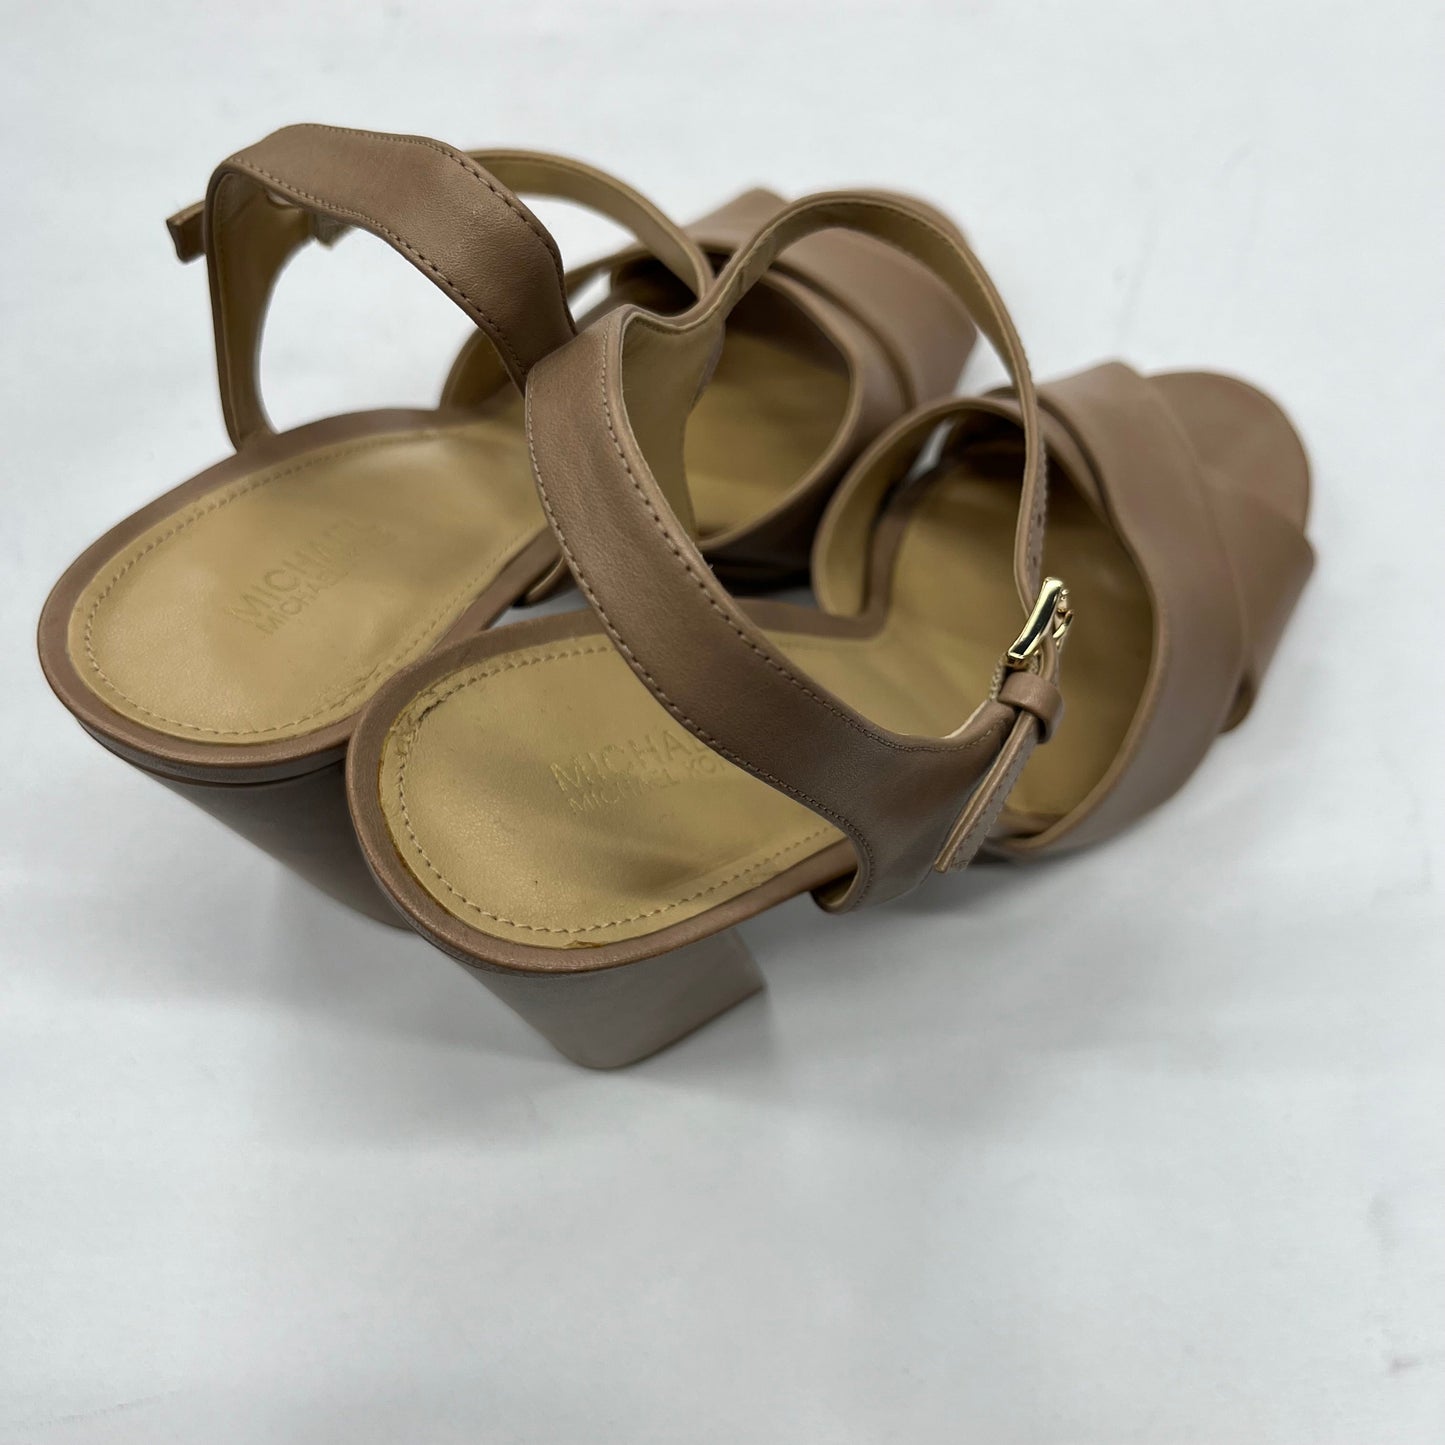 Shoes Heels Block By Michael Kors  Size: 9.5